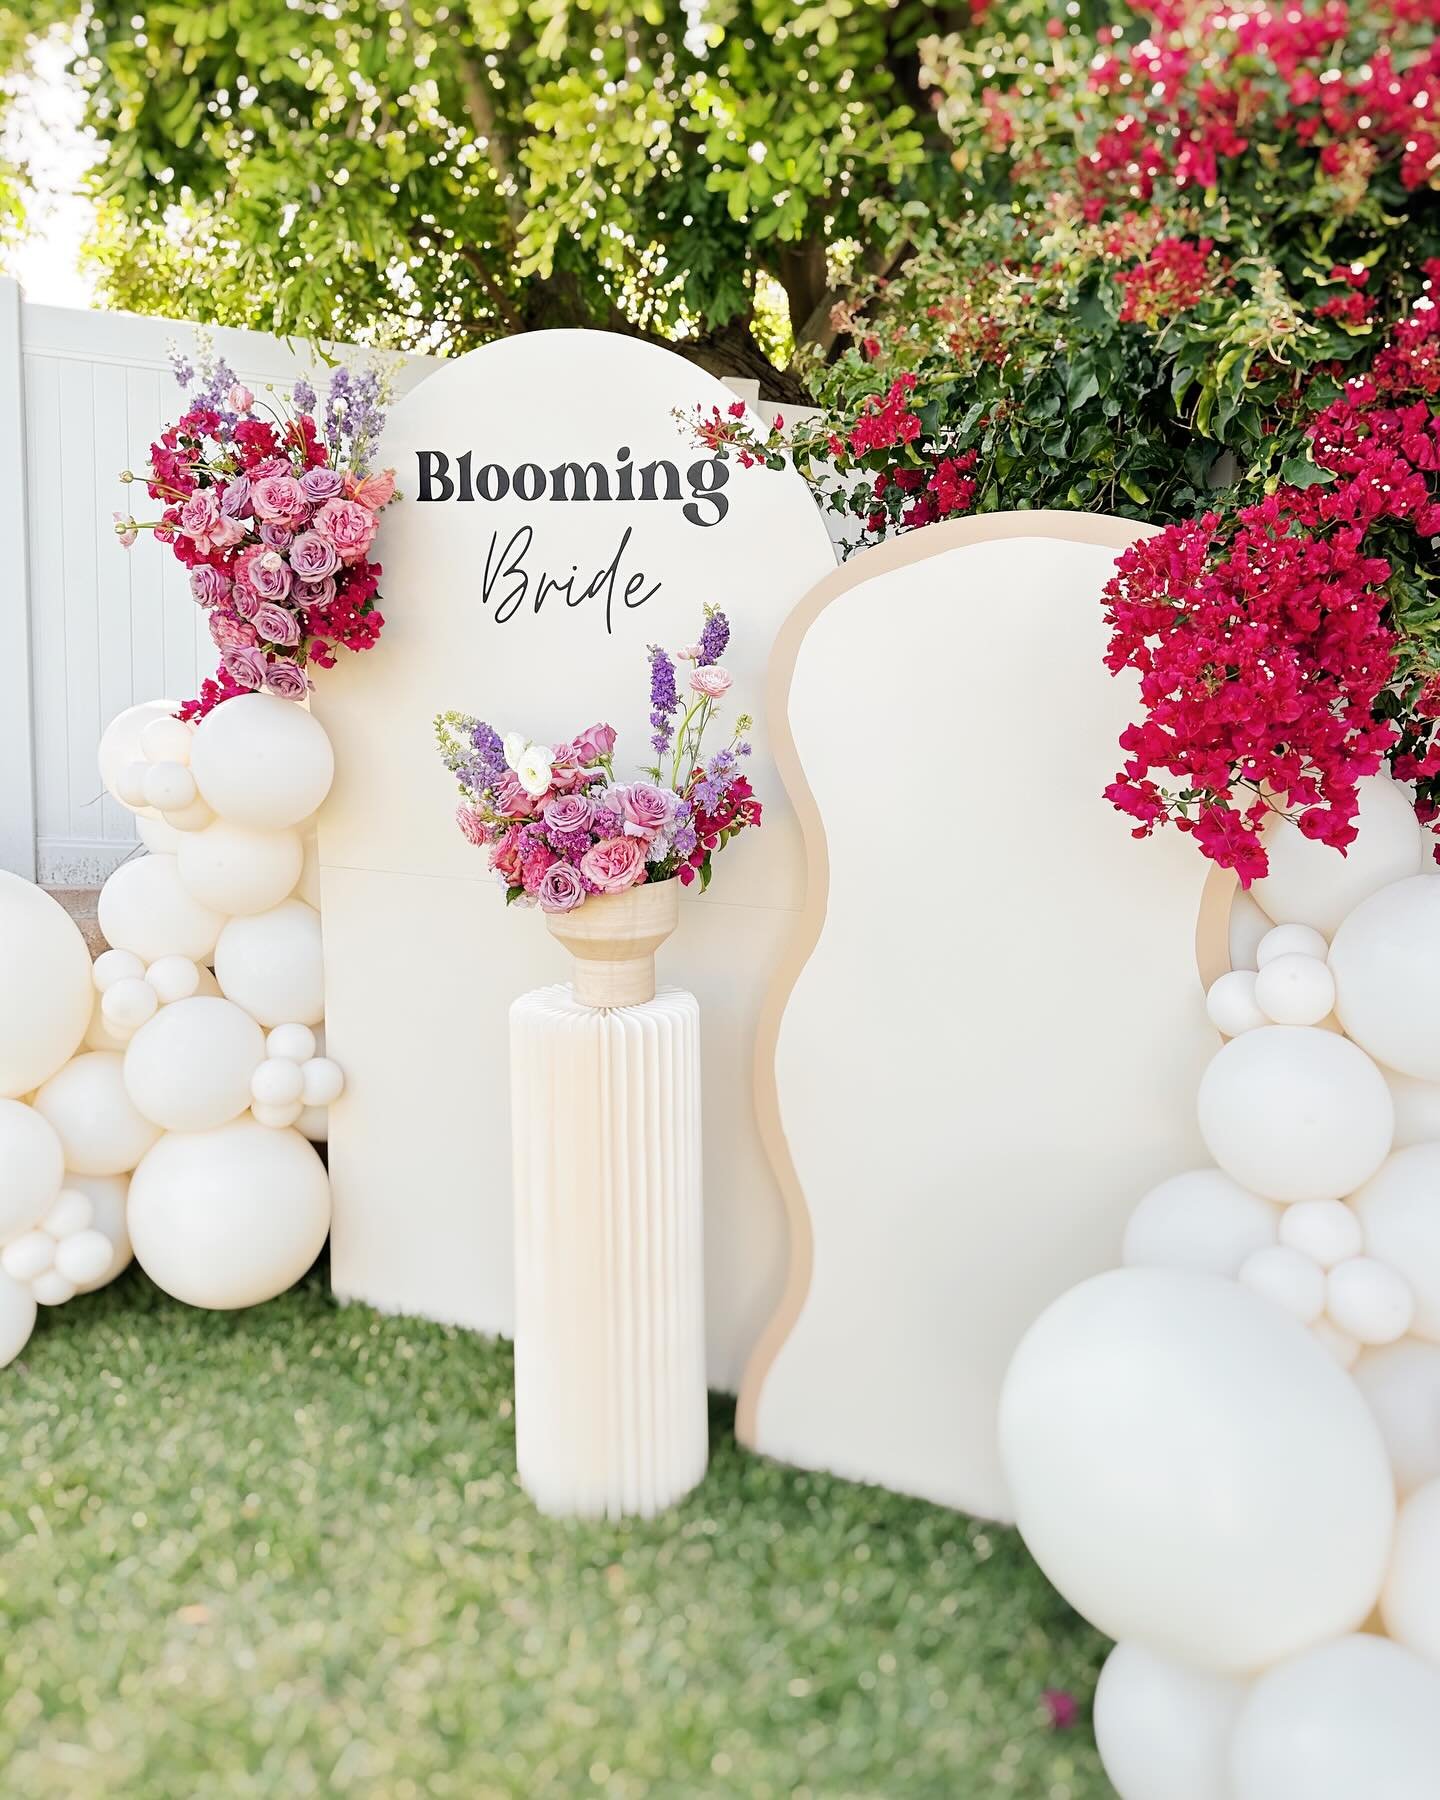 Let&rsquo;s bloom together 🌸💕. 

Design, balloons and florals: @itsblushandbloom 

#bridalshower #bloomingbride #bride #bridalinspiration